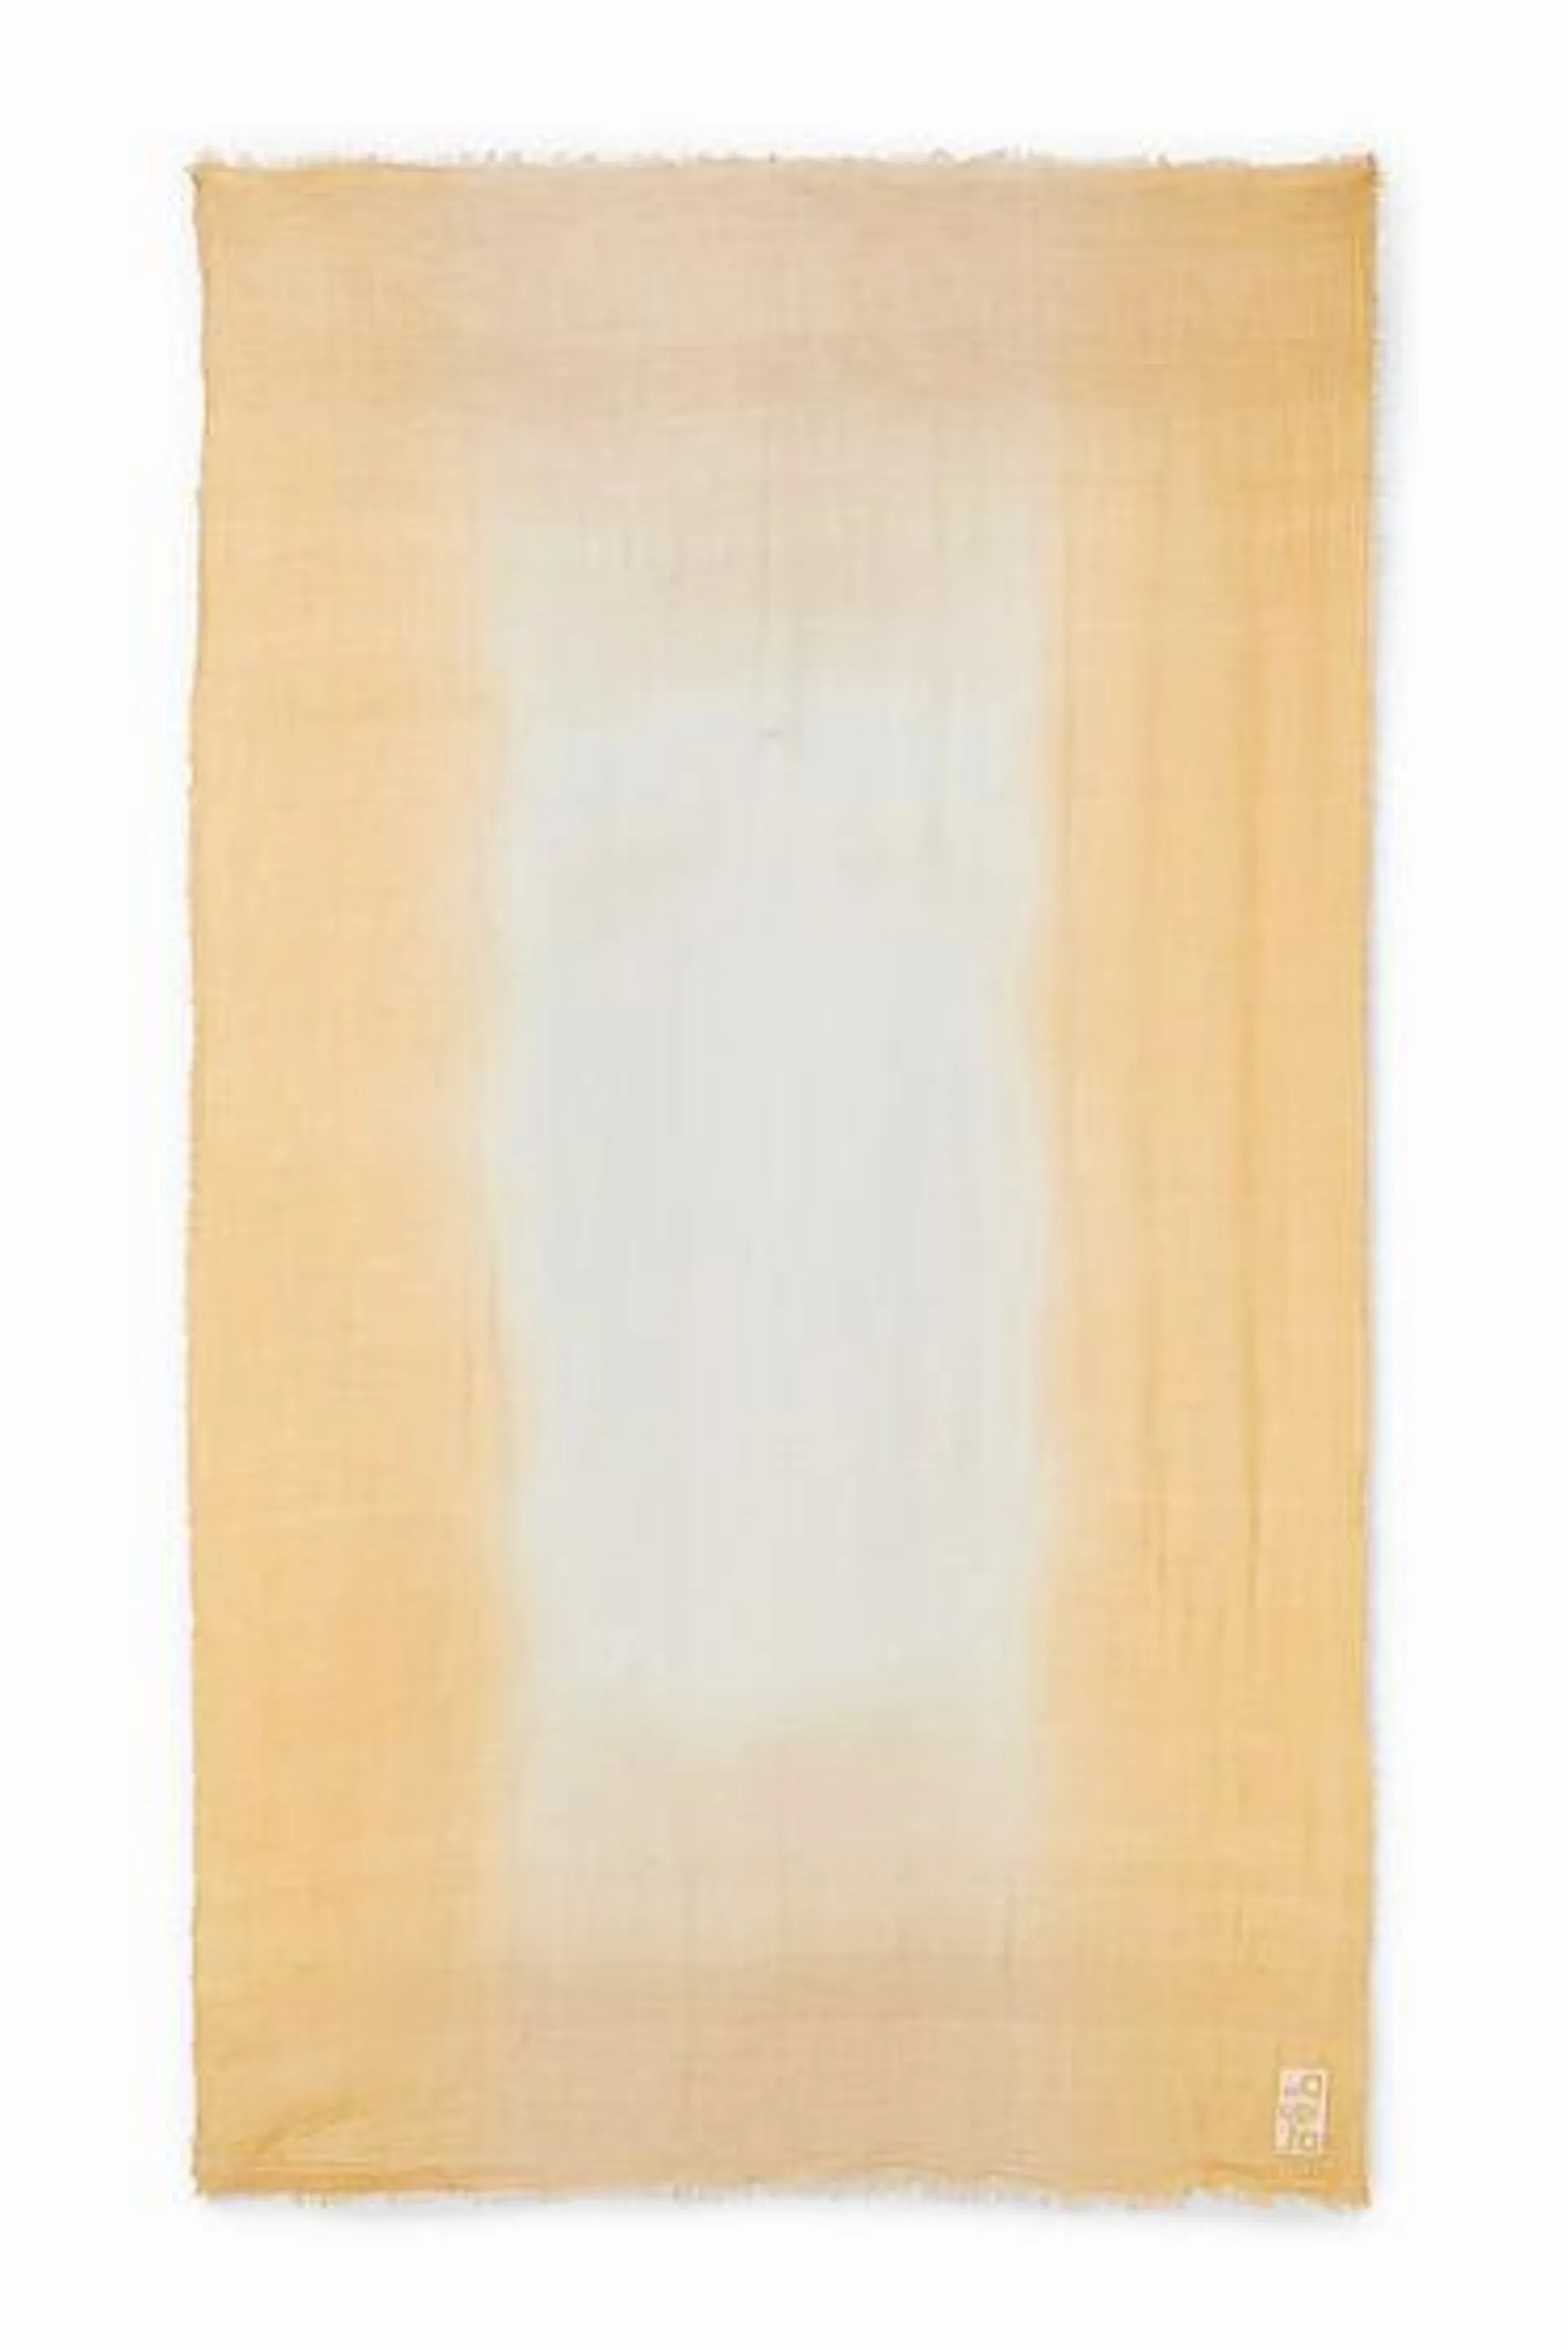 Rectangular tie-dye gradient foulard